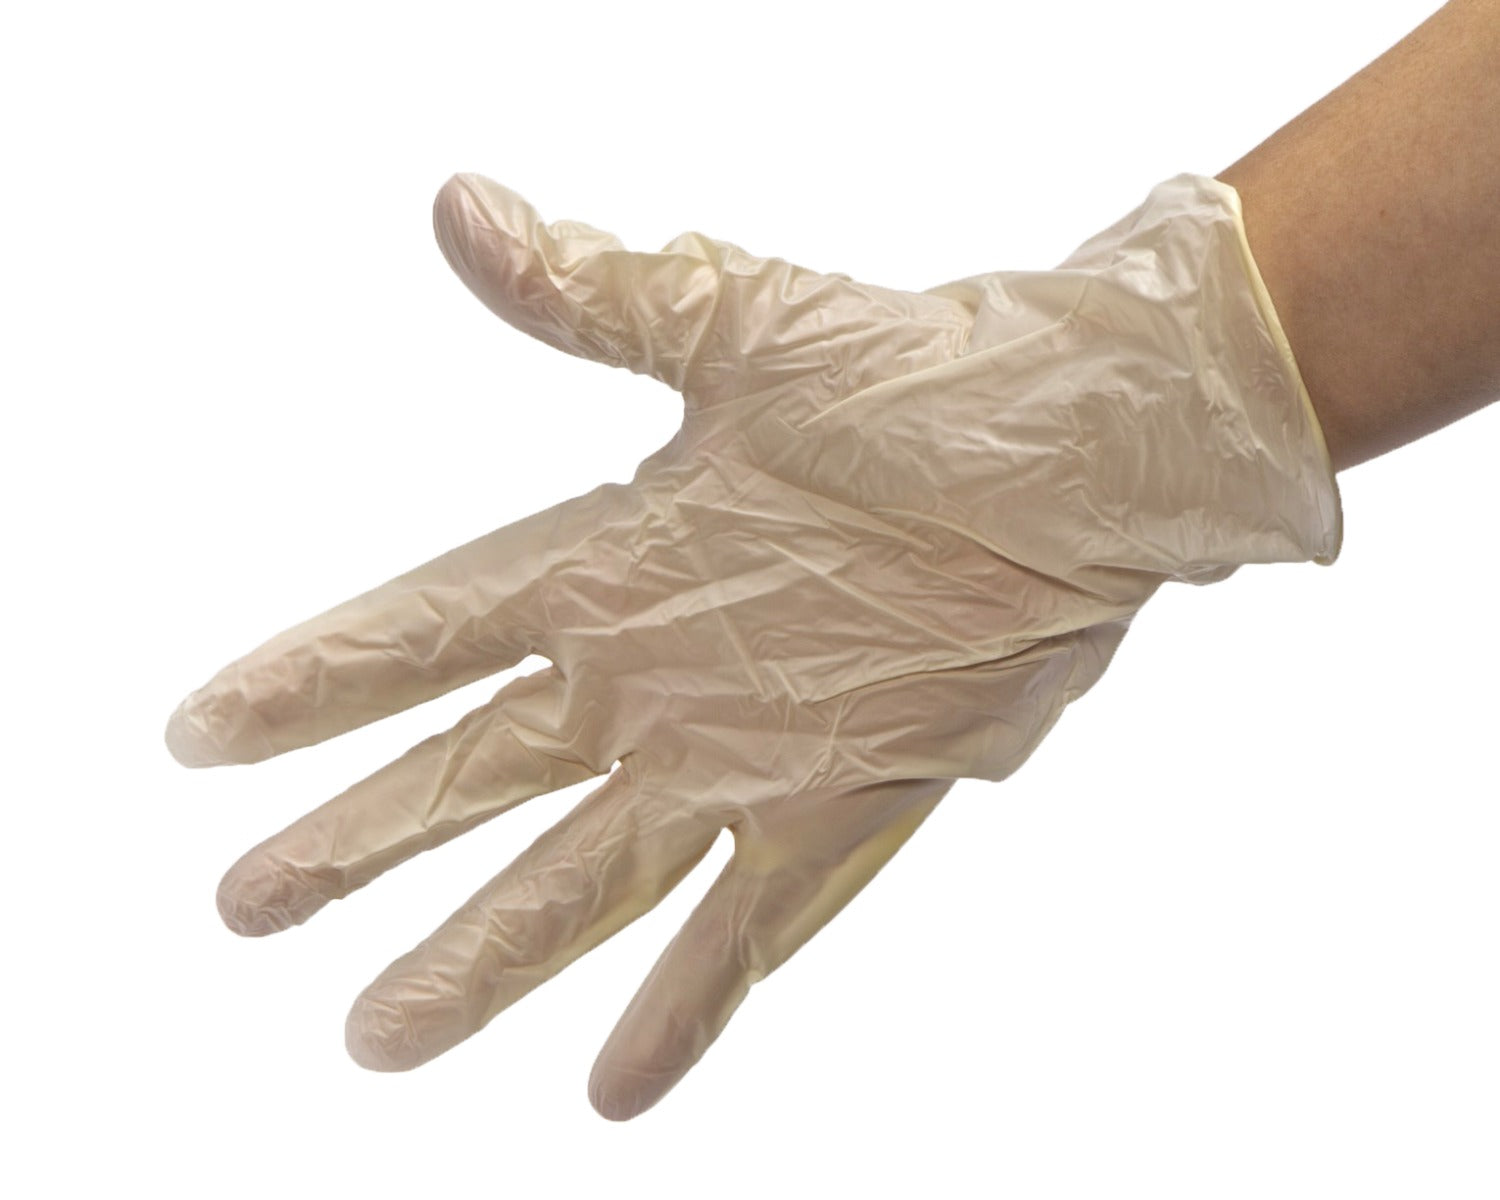 Diamond Gloves Powder-Free Strech Vinyl Non-Medical XL (10/100)(1000/cs)